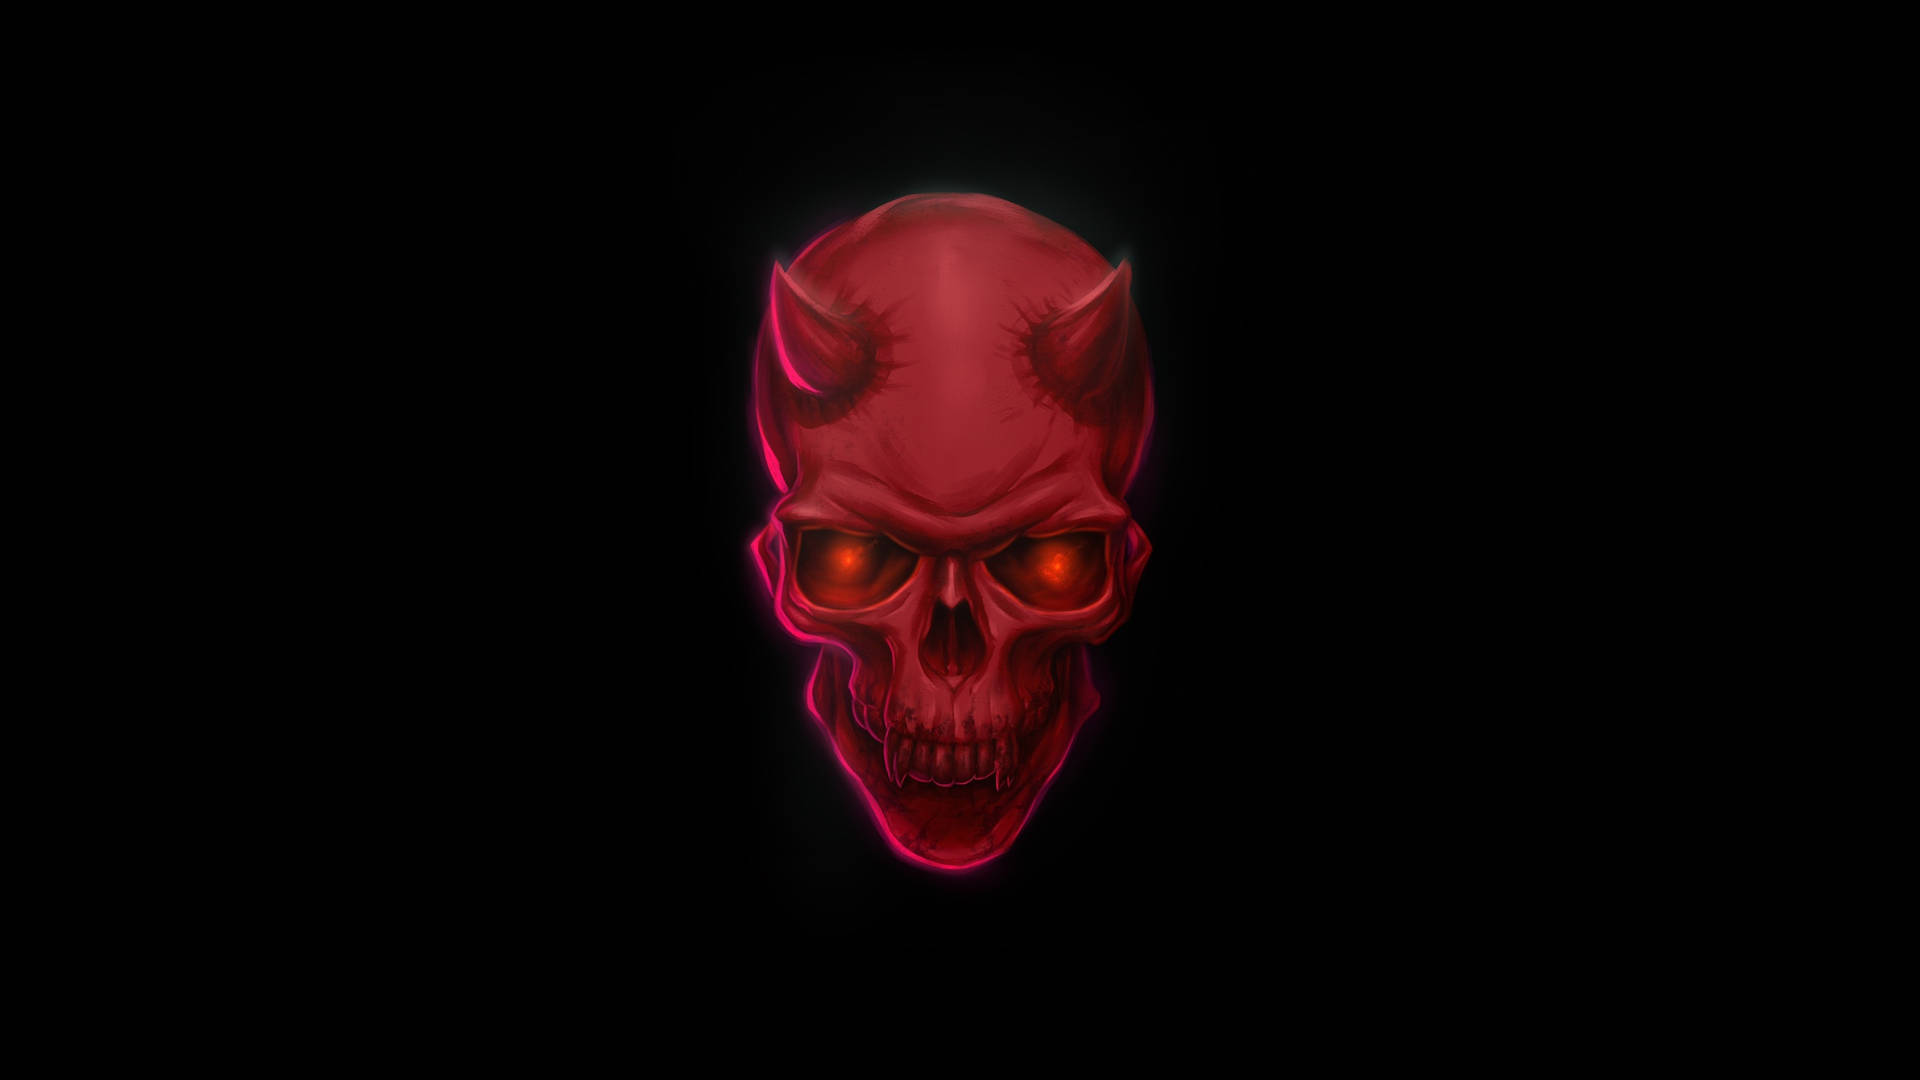 Cool Devil Red Skull Background